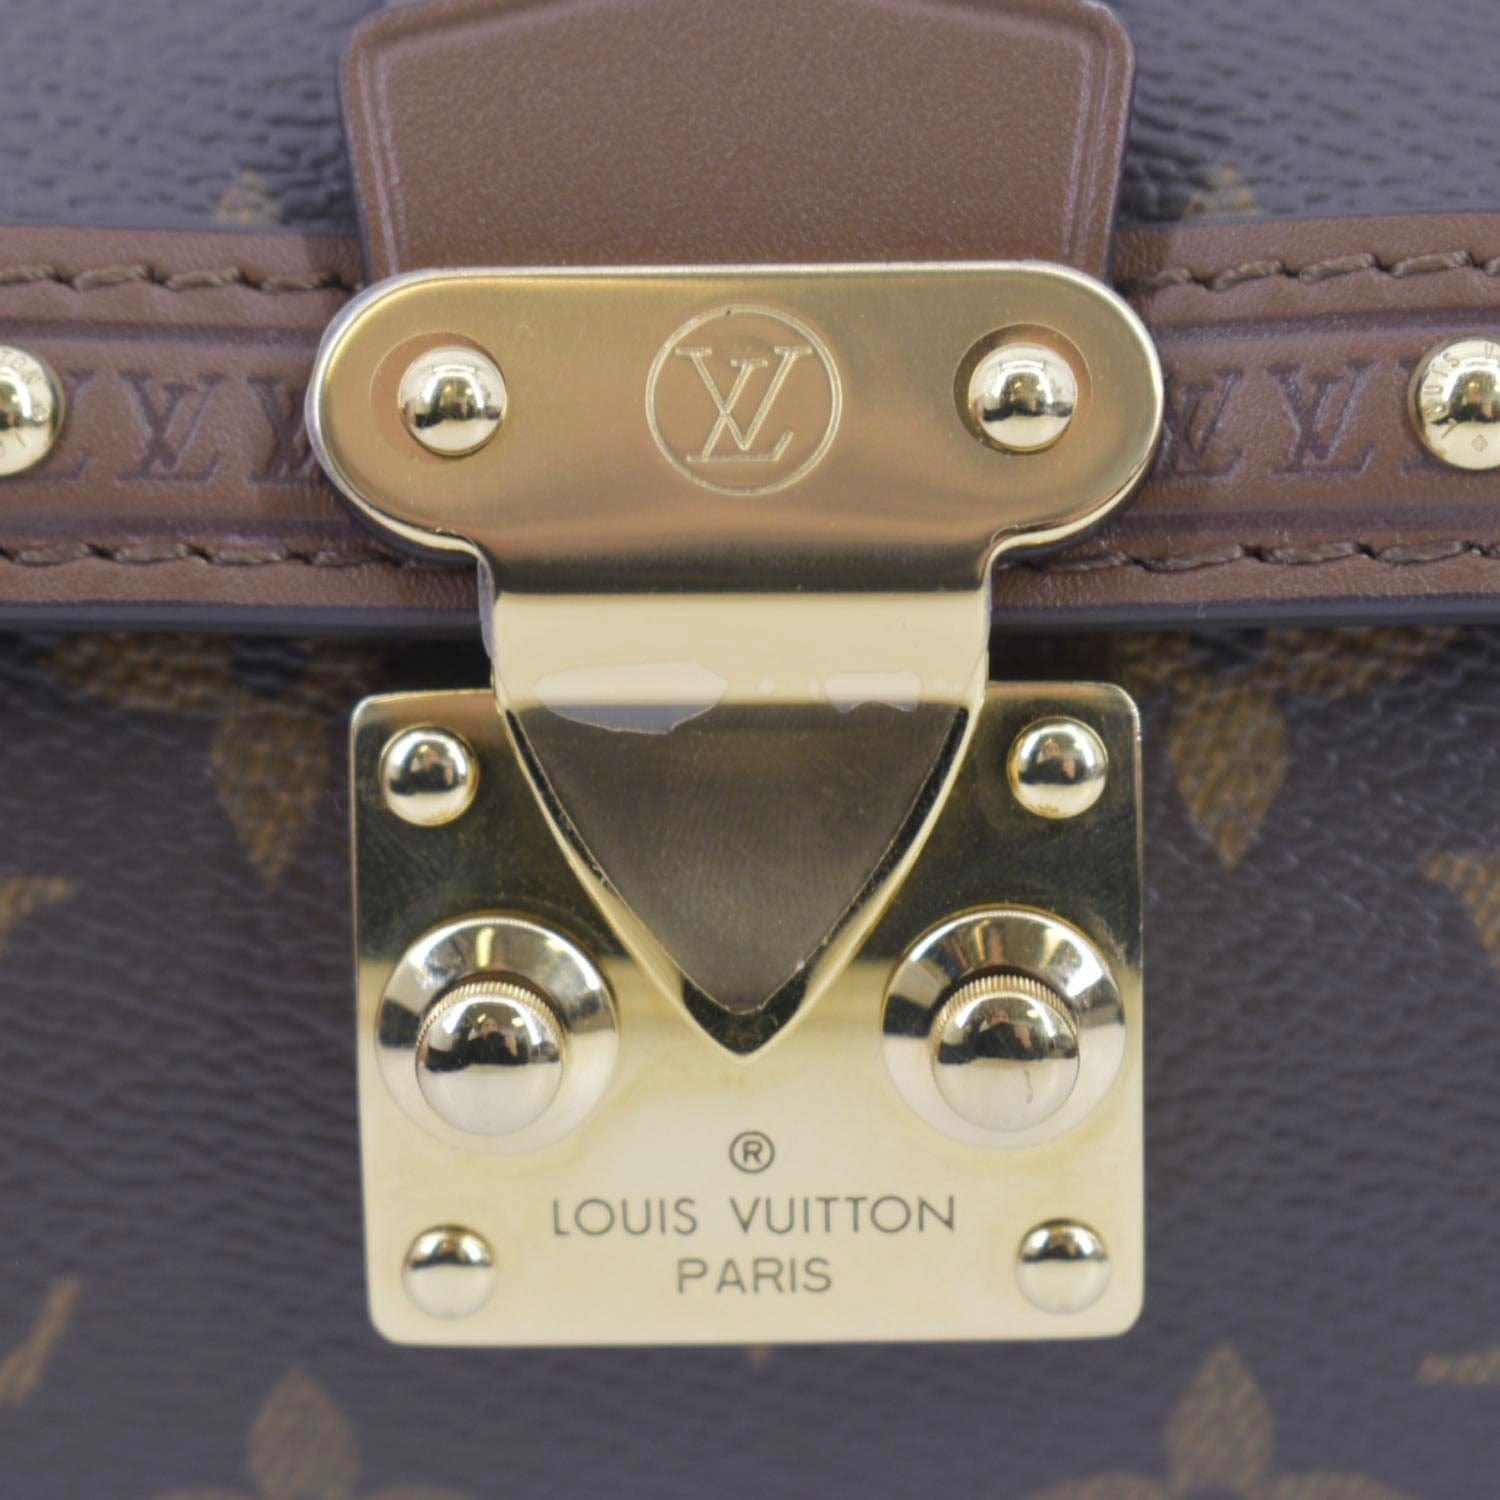 Louis Vuitton Papillon Trunk Bag Monogram Canvas Brown 23339311